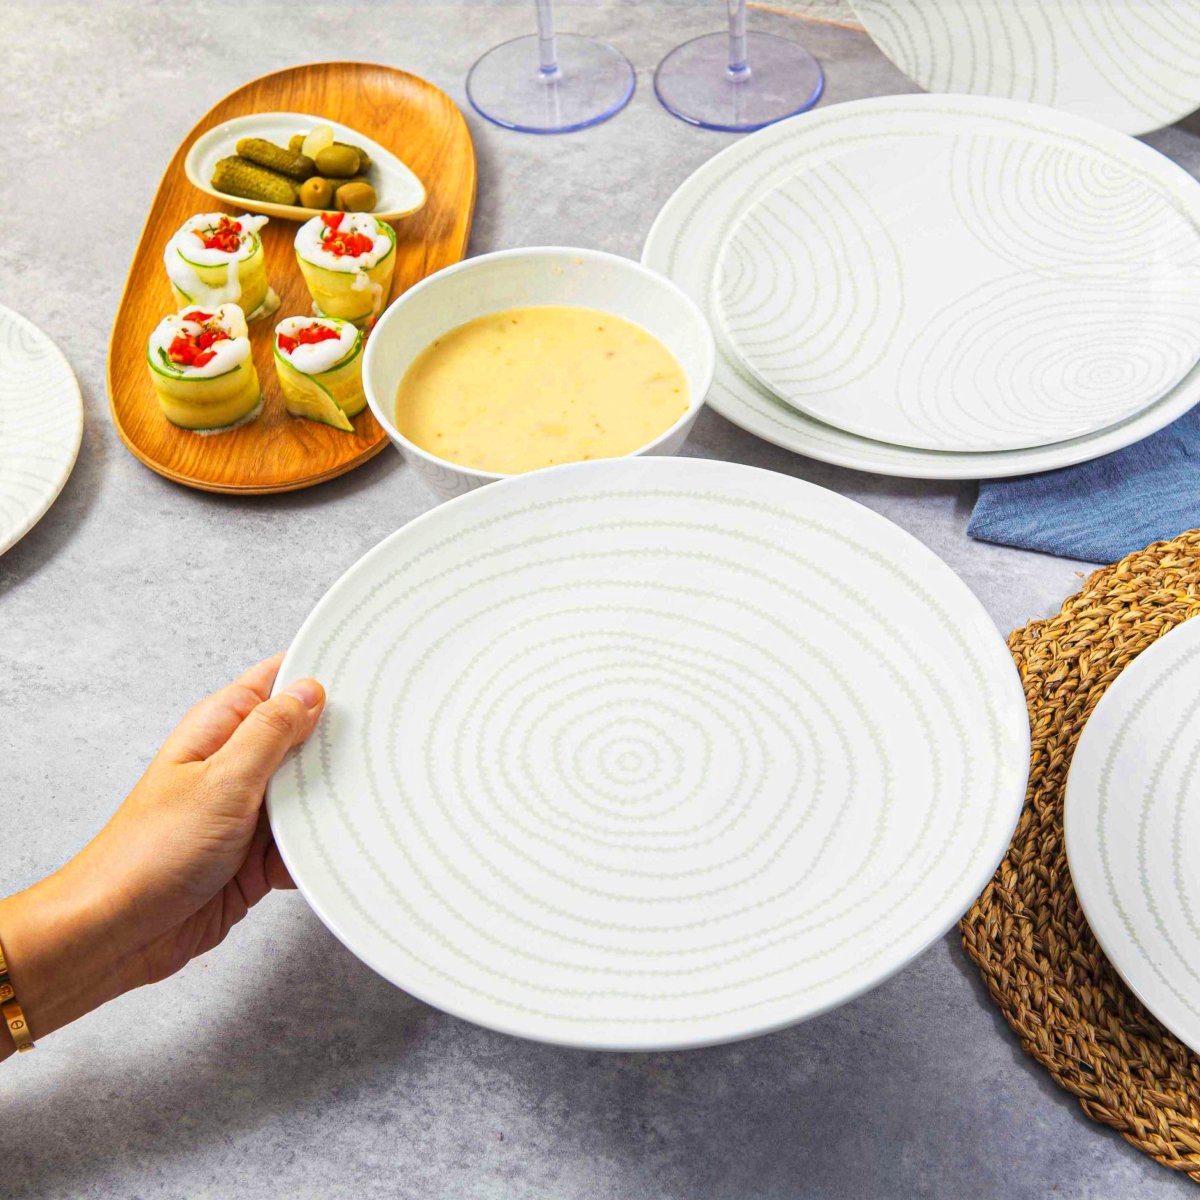 12pc Decorated Melamine Plate & Bowl Dinnerware Set - bzyoo